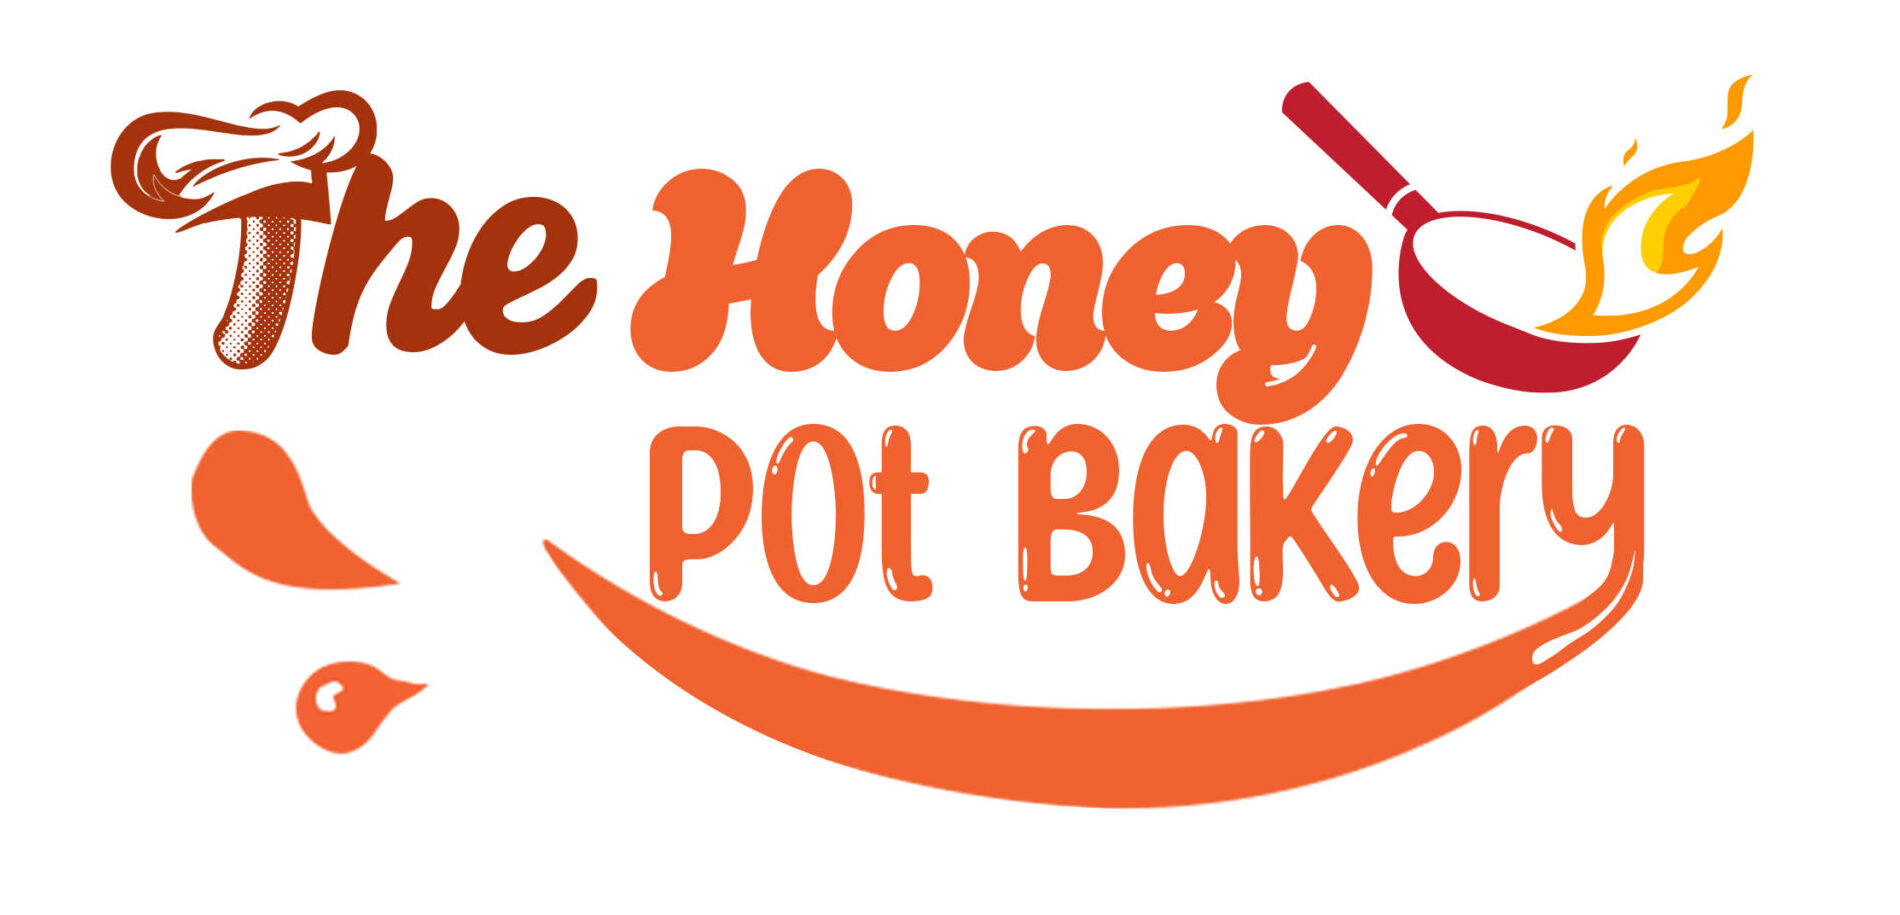 The Honey Pot Bakery Logo